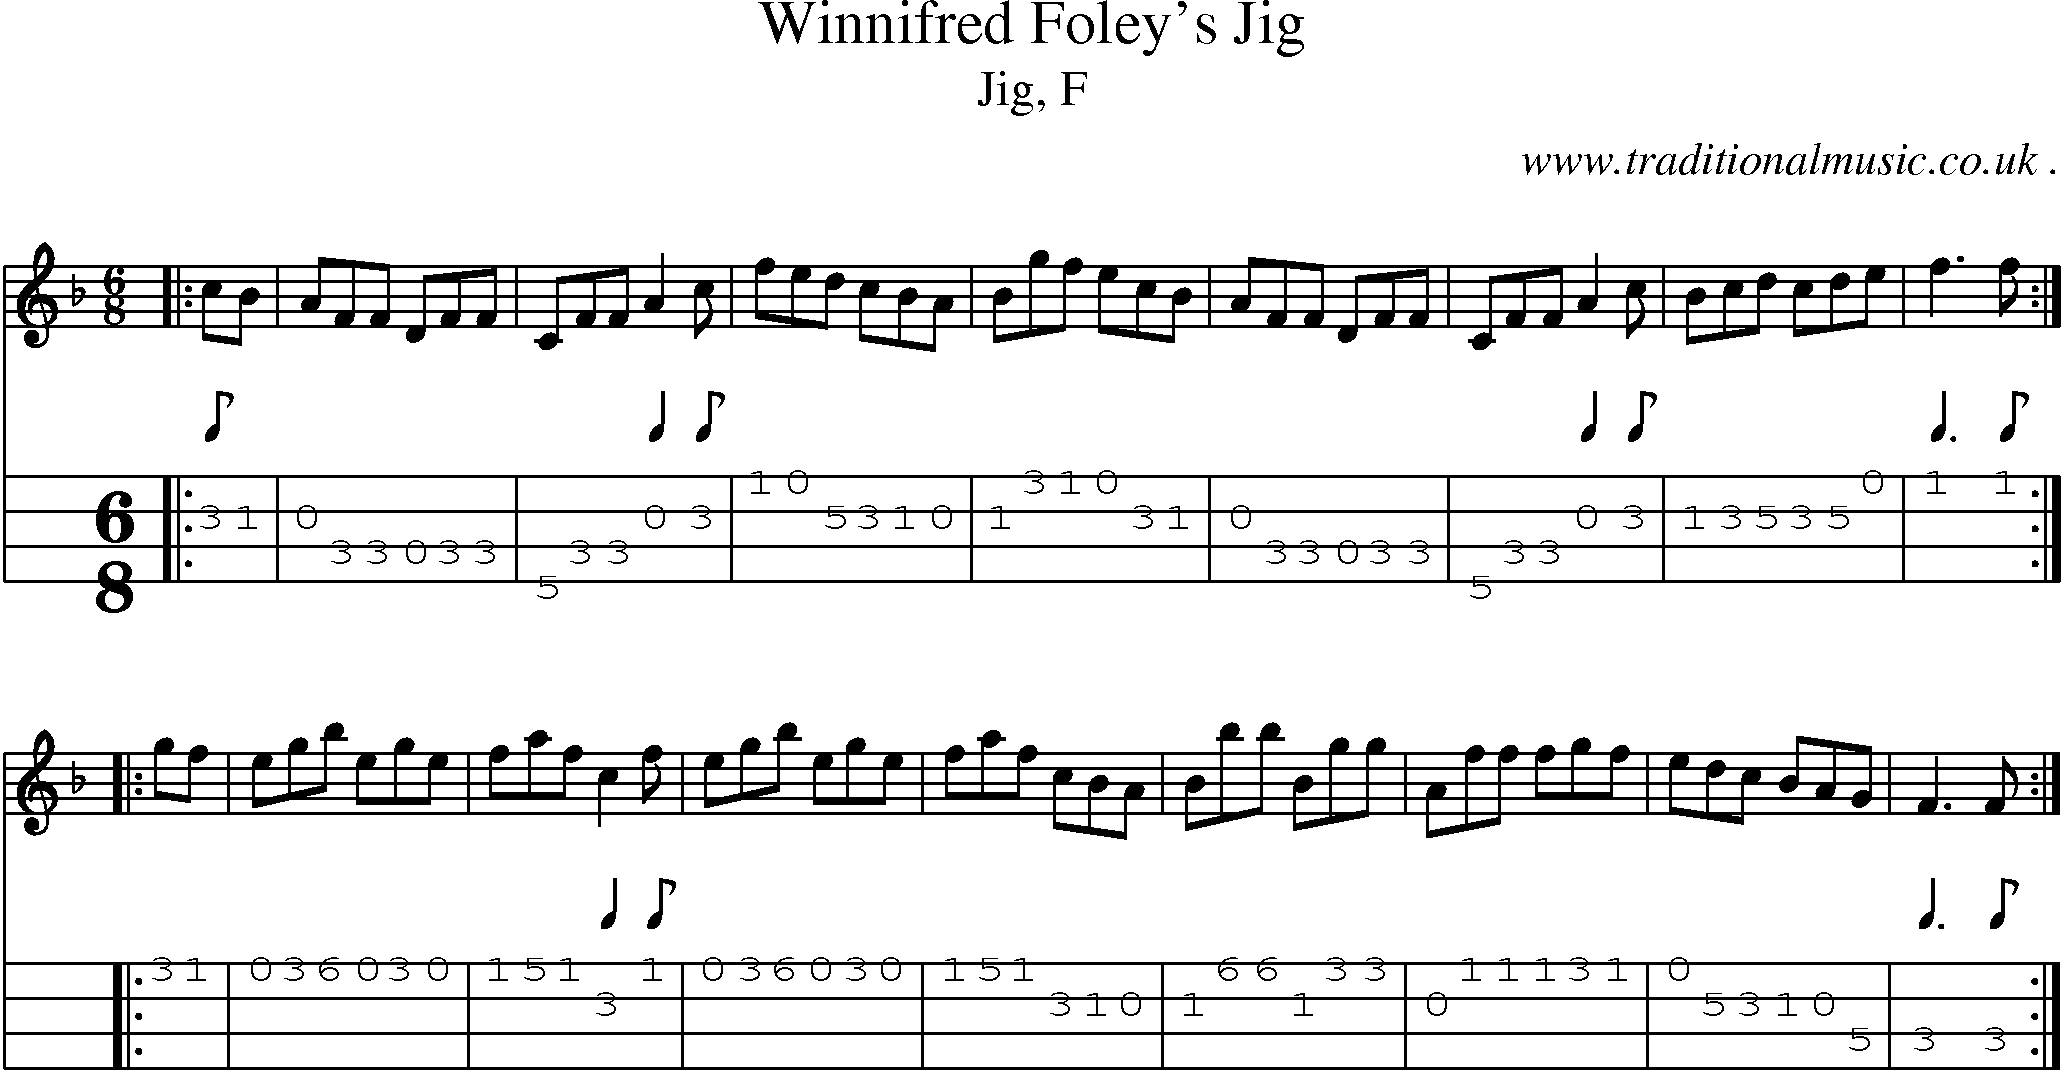 Sheet-music  score, Chords and Mandolin Tabs for Winnifred Foleys Jig